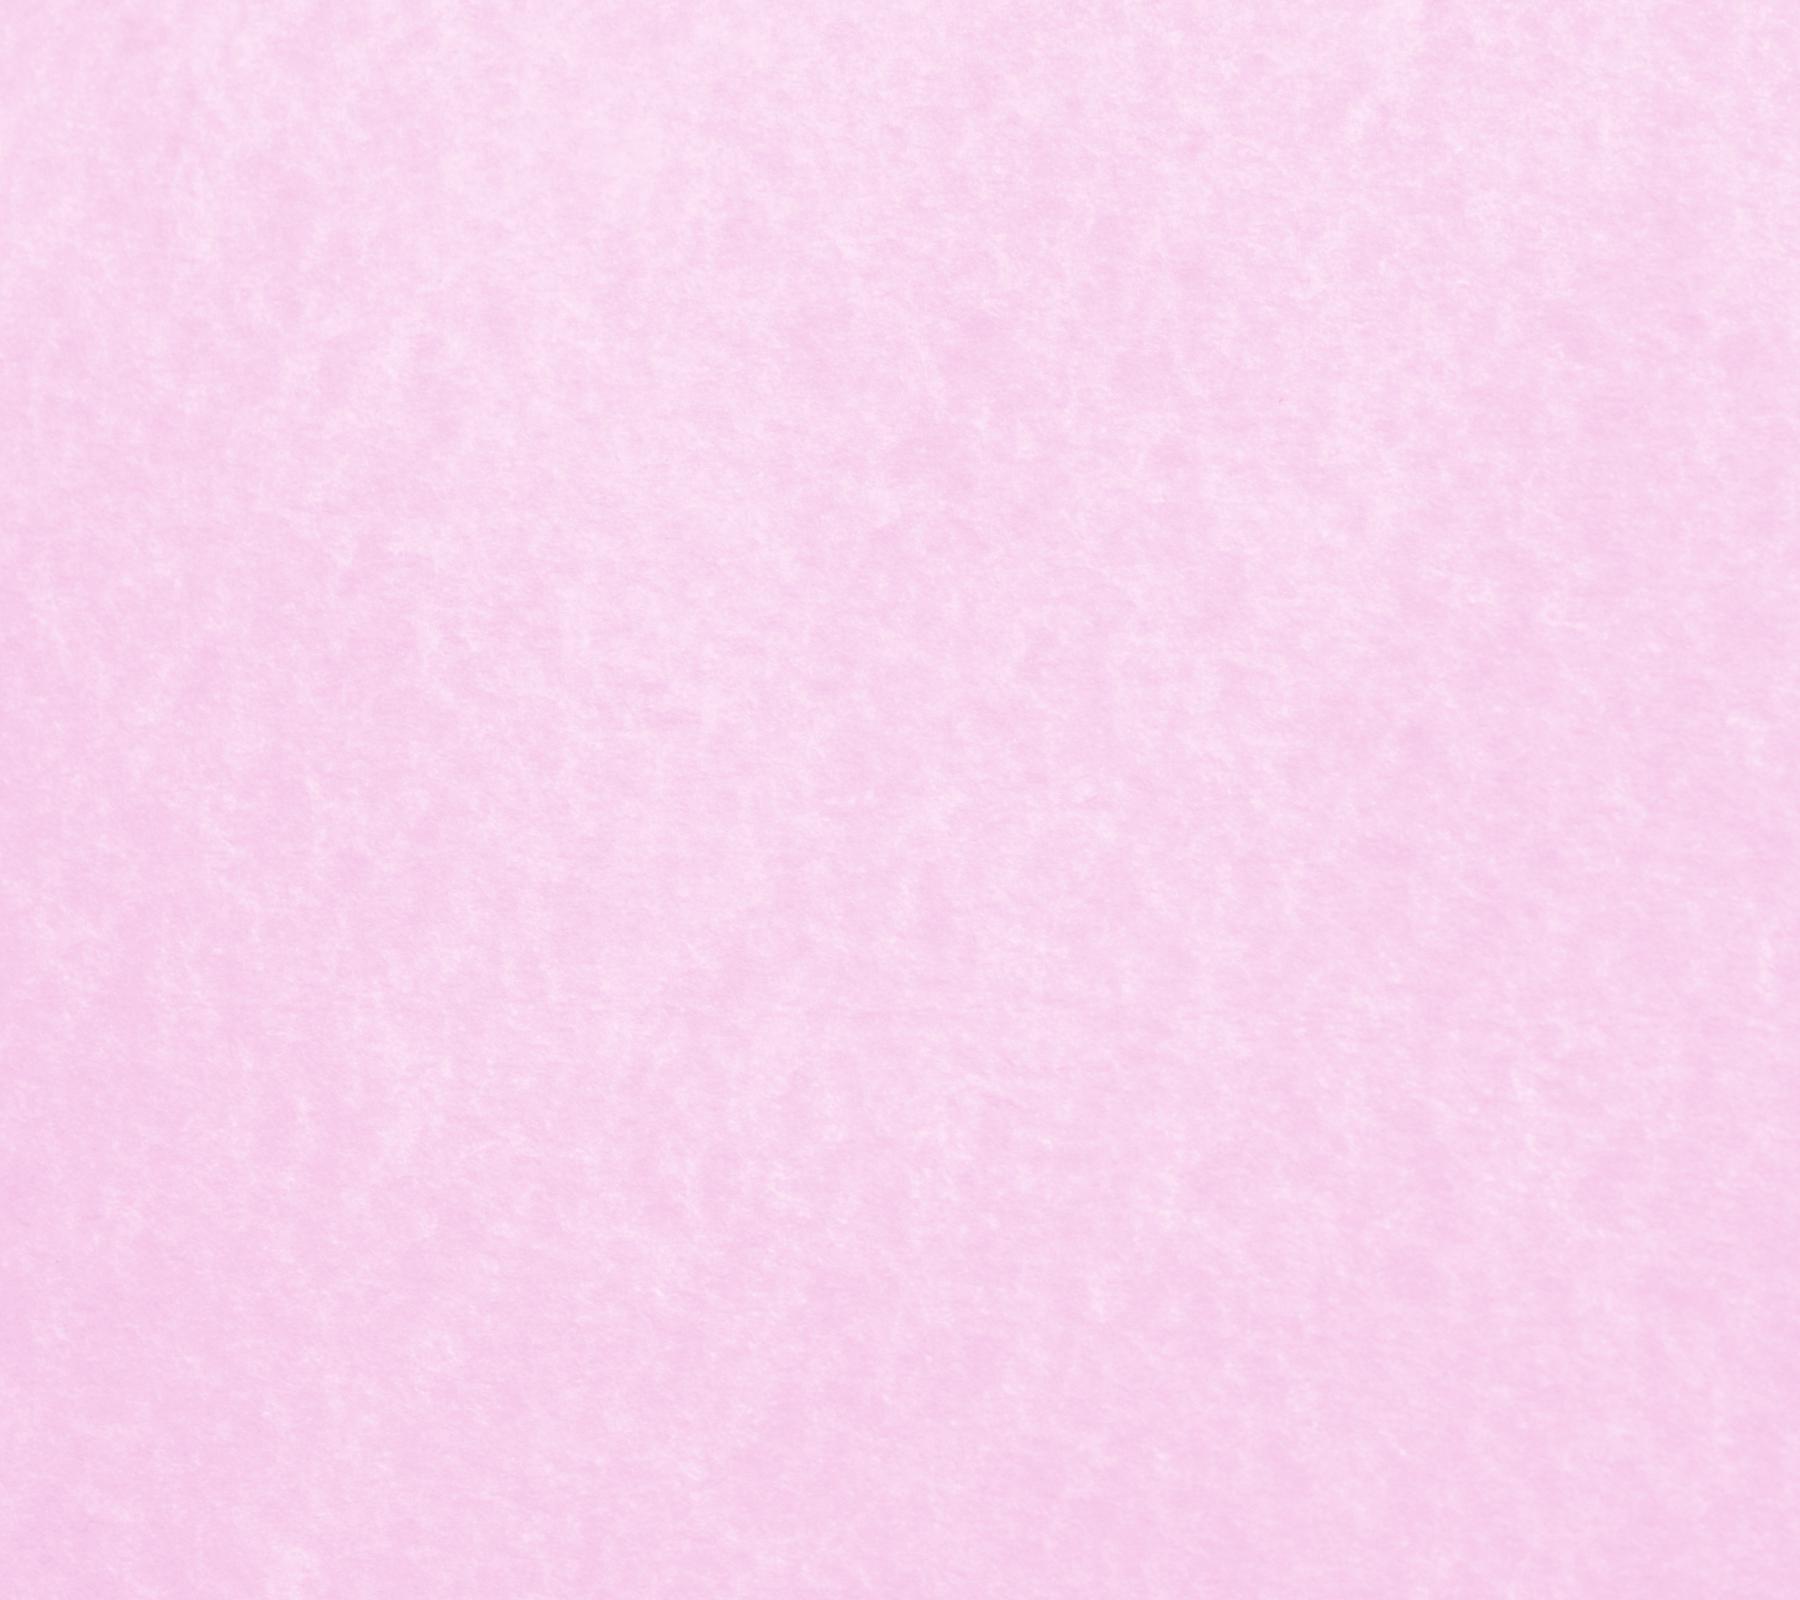 background wallpaper image light pink parchment paper background